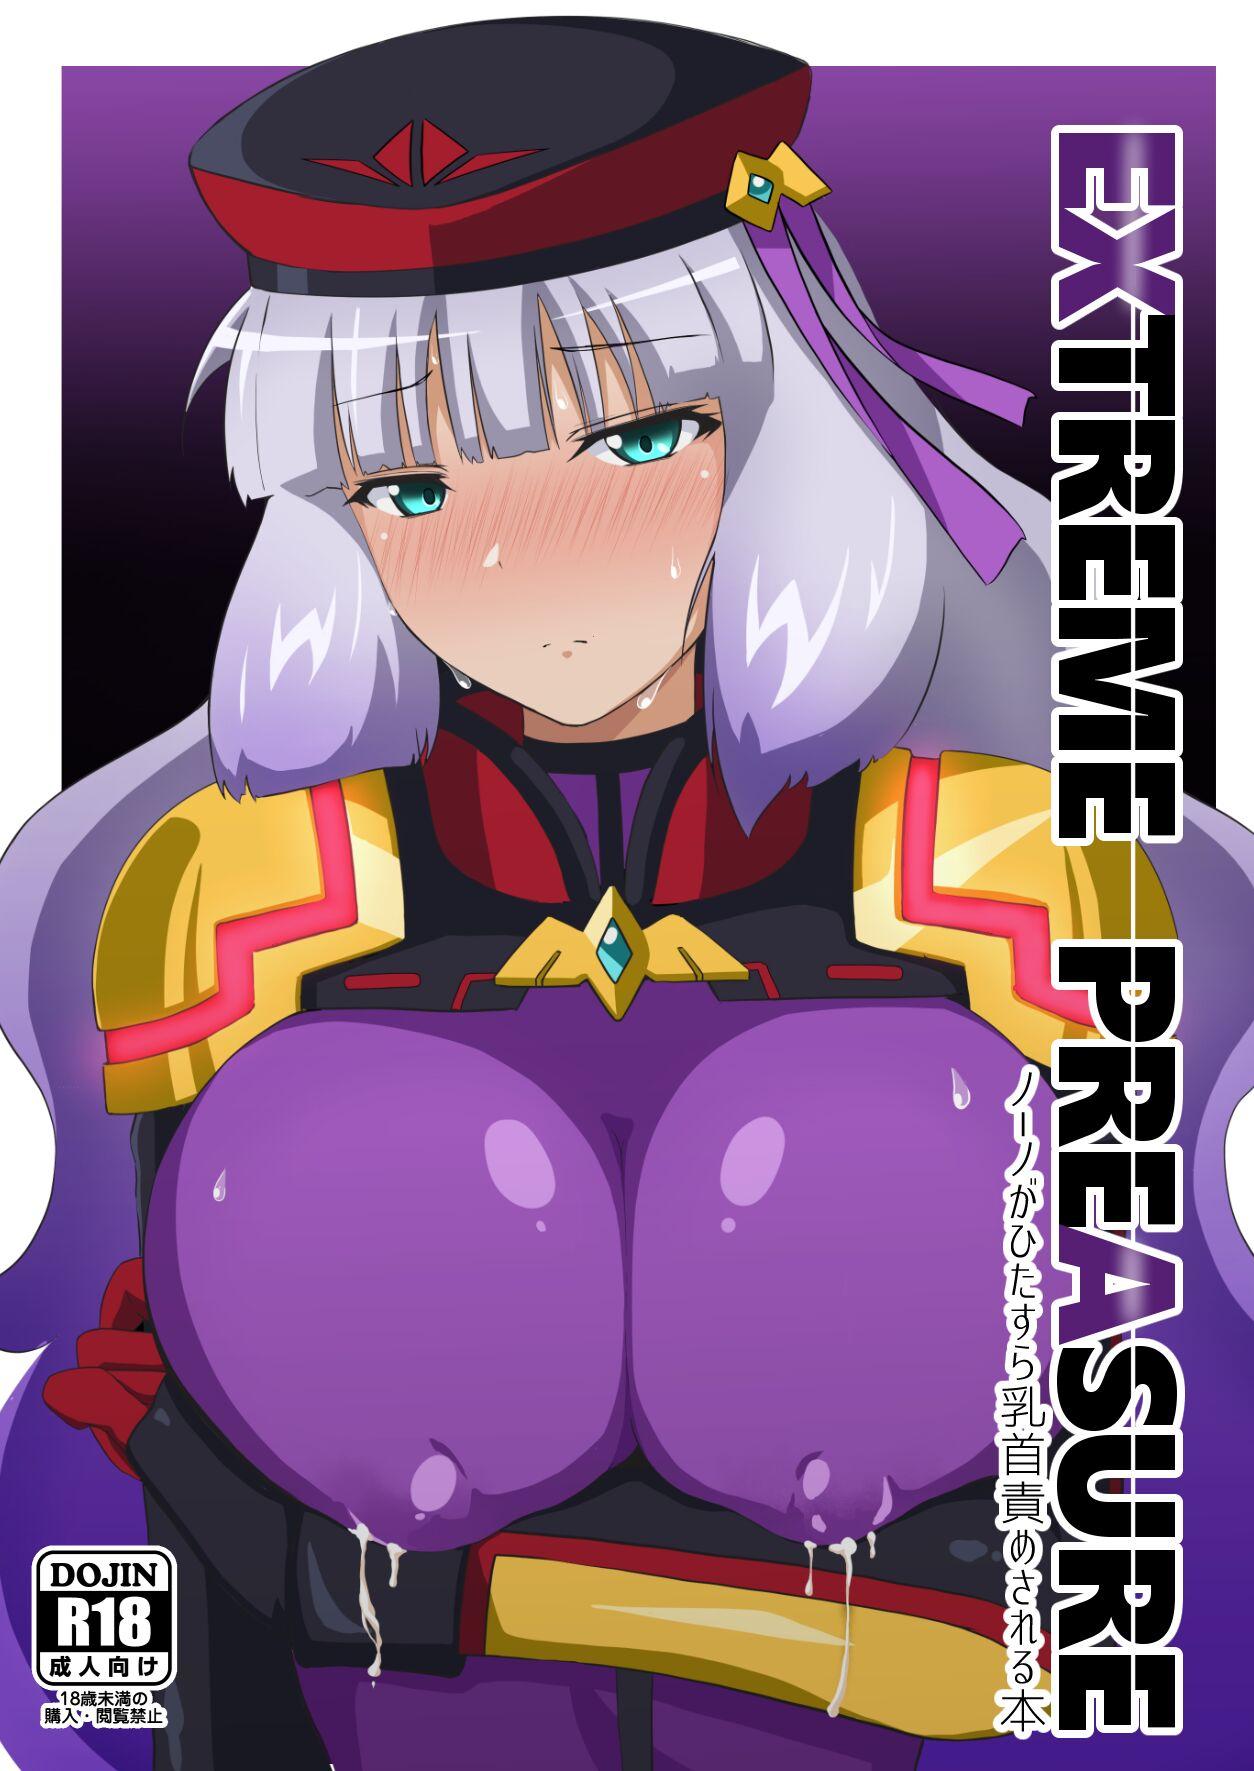 Horny EXTREME PREASURE - Gundam exa New - Picture 1